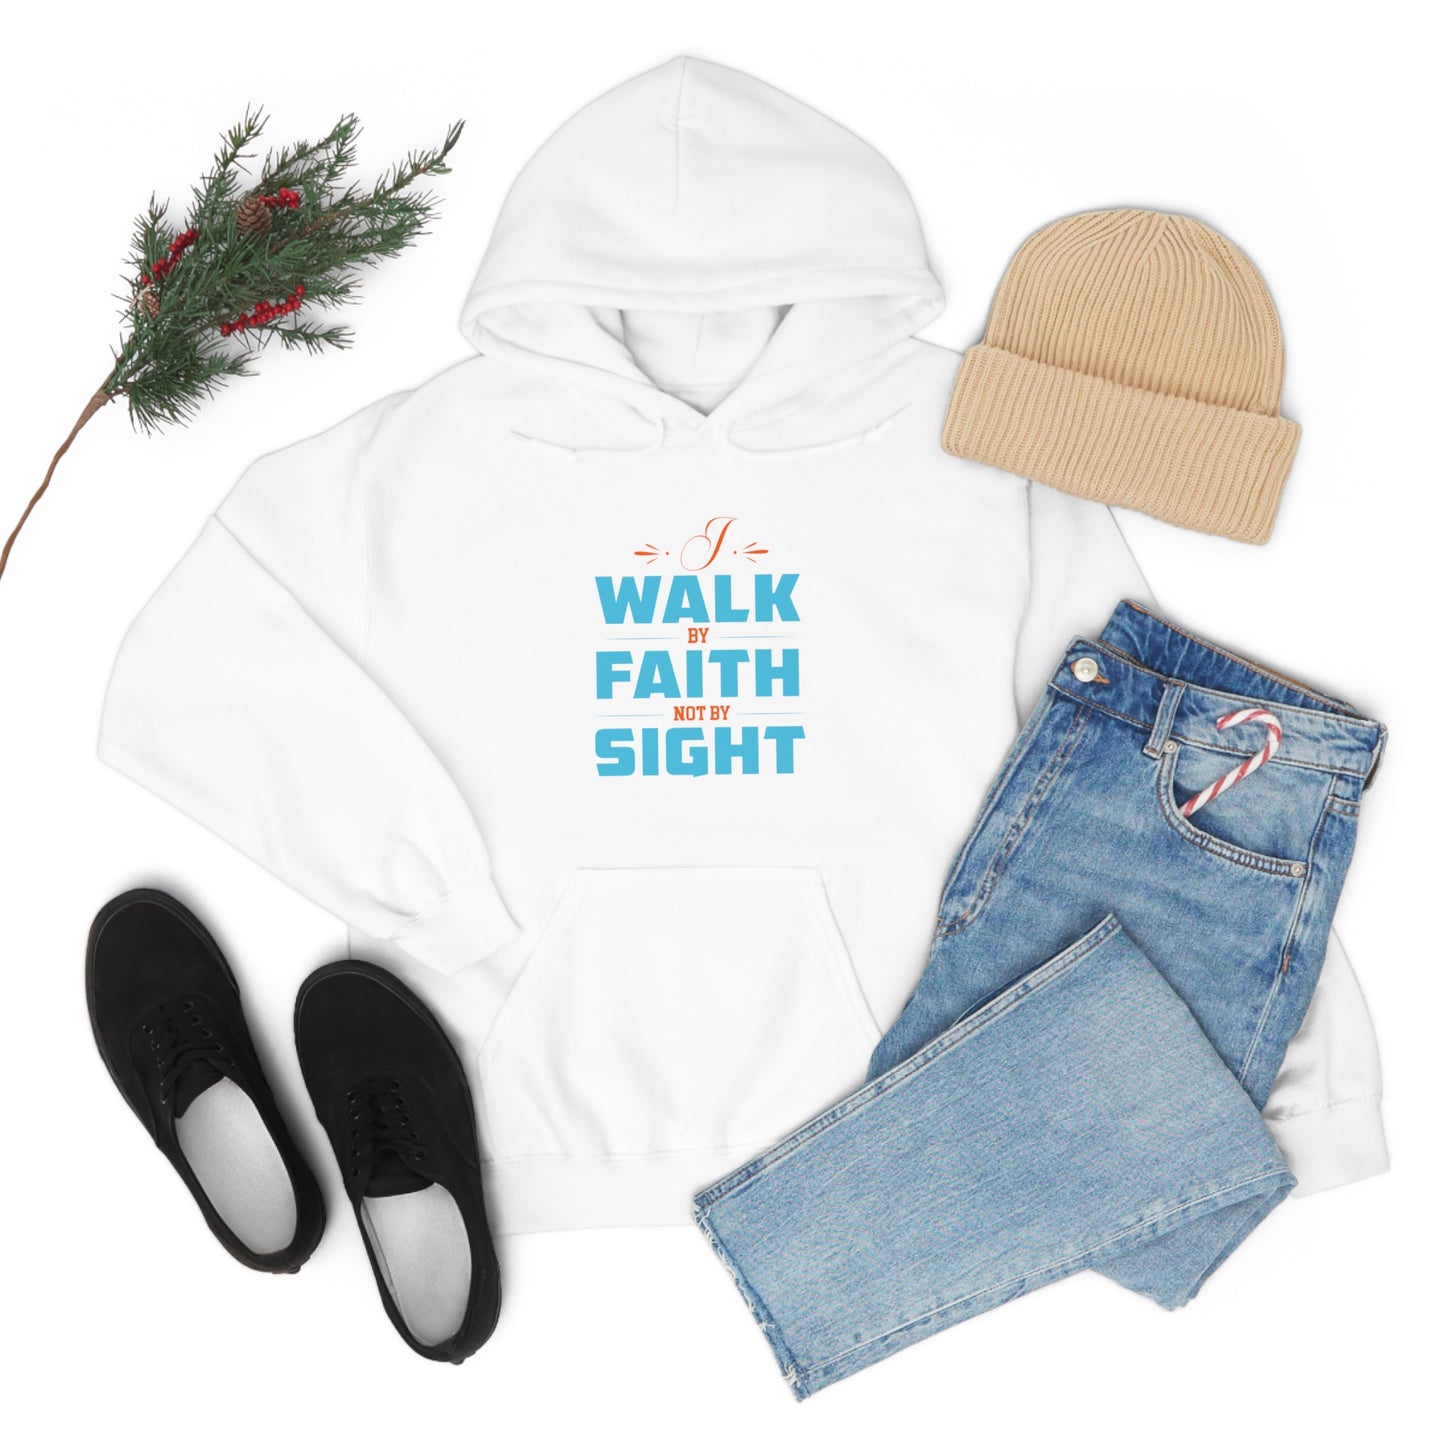 I Walk By Faith Not By Sight Unisex Hooded Sweatshirt